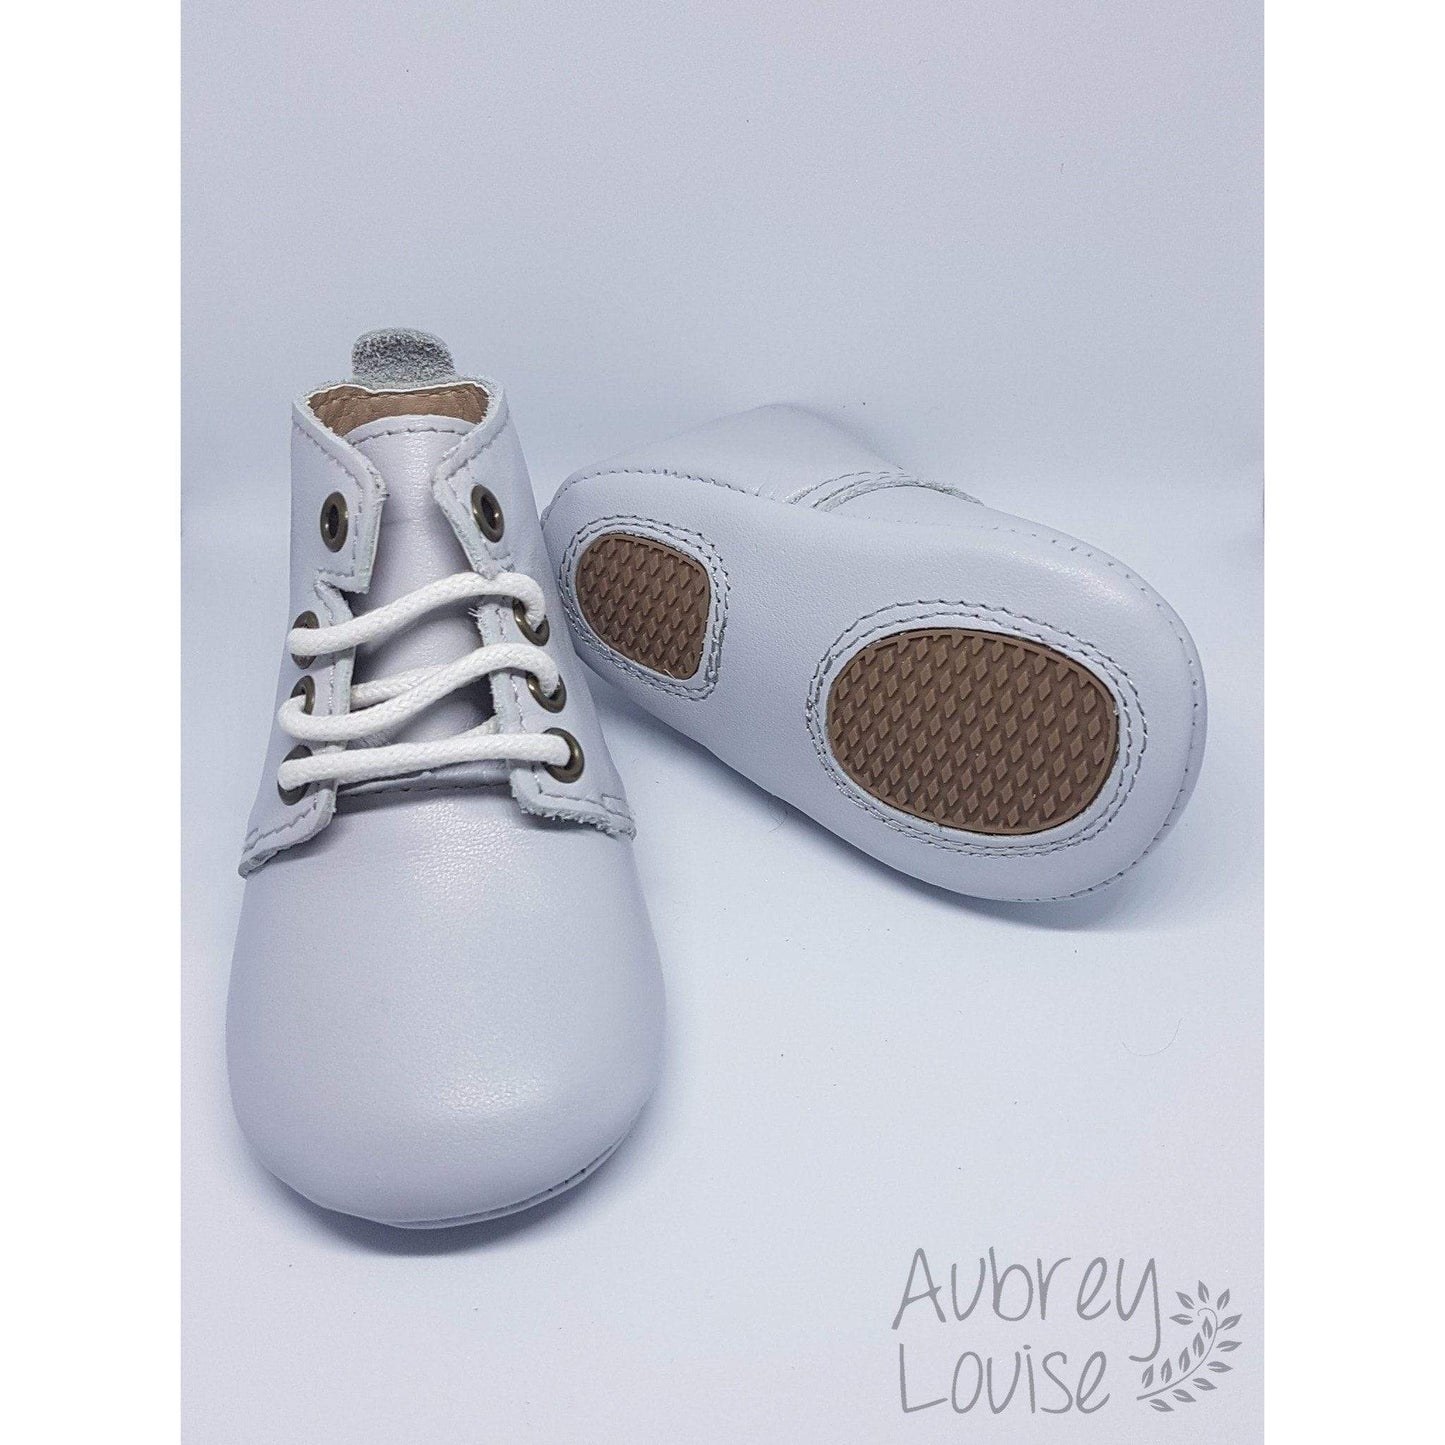 Aubrey Louise Shoes 2 / Grey Oxford Boot non-slip sole